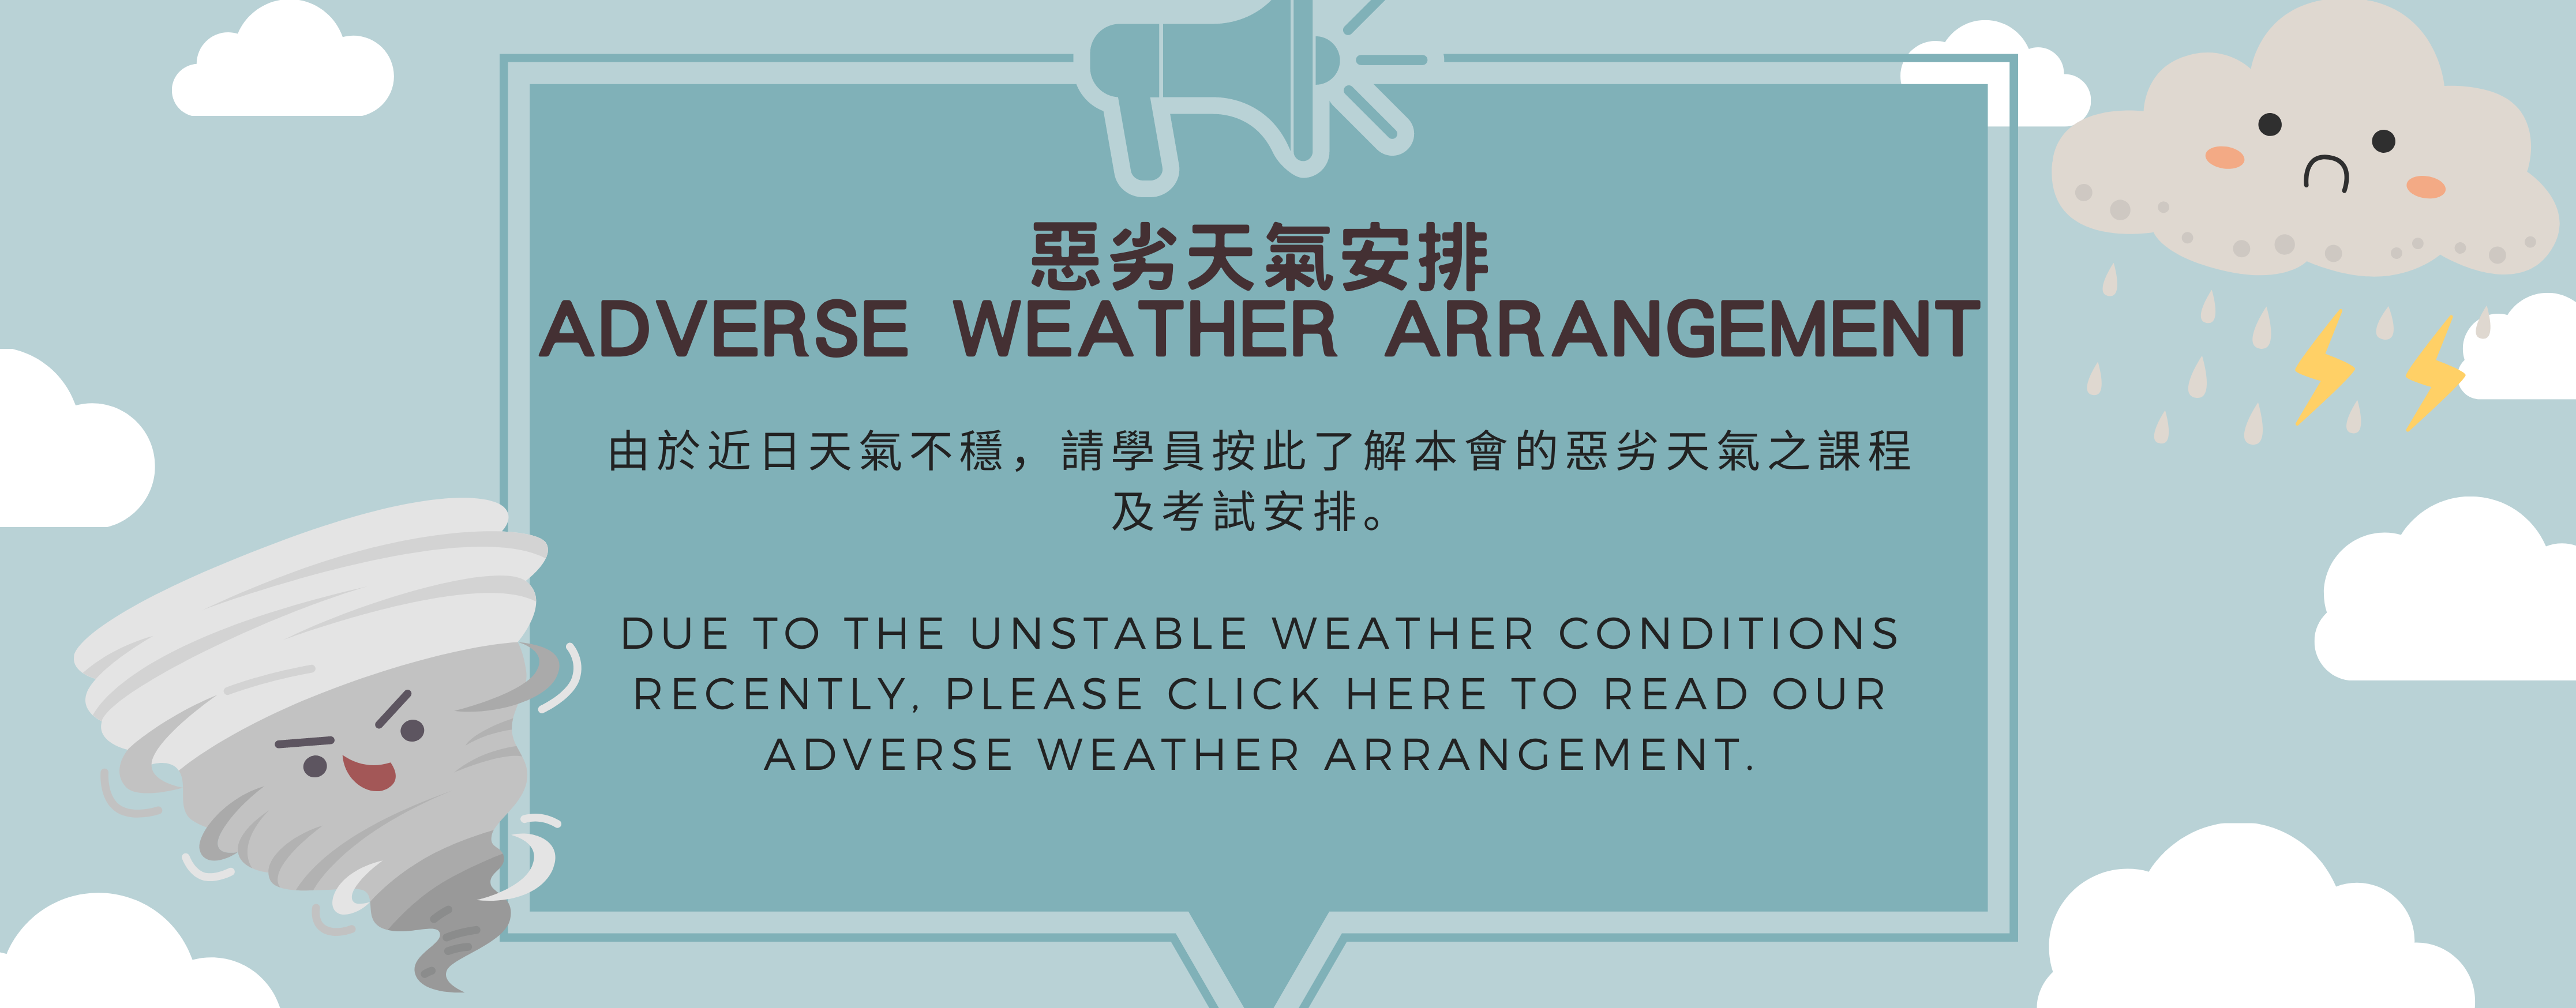 Adverse Weather Arrangement